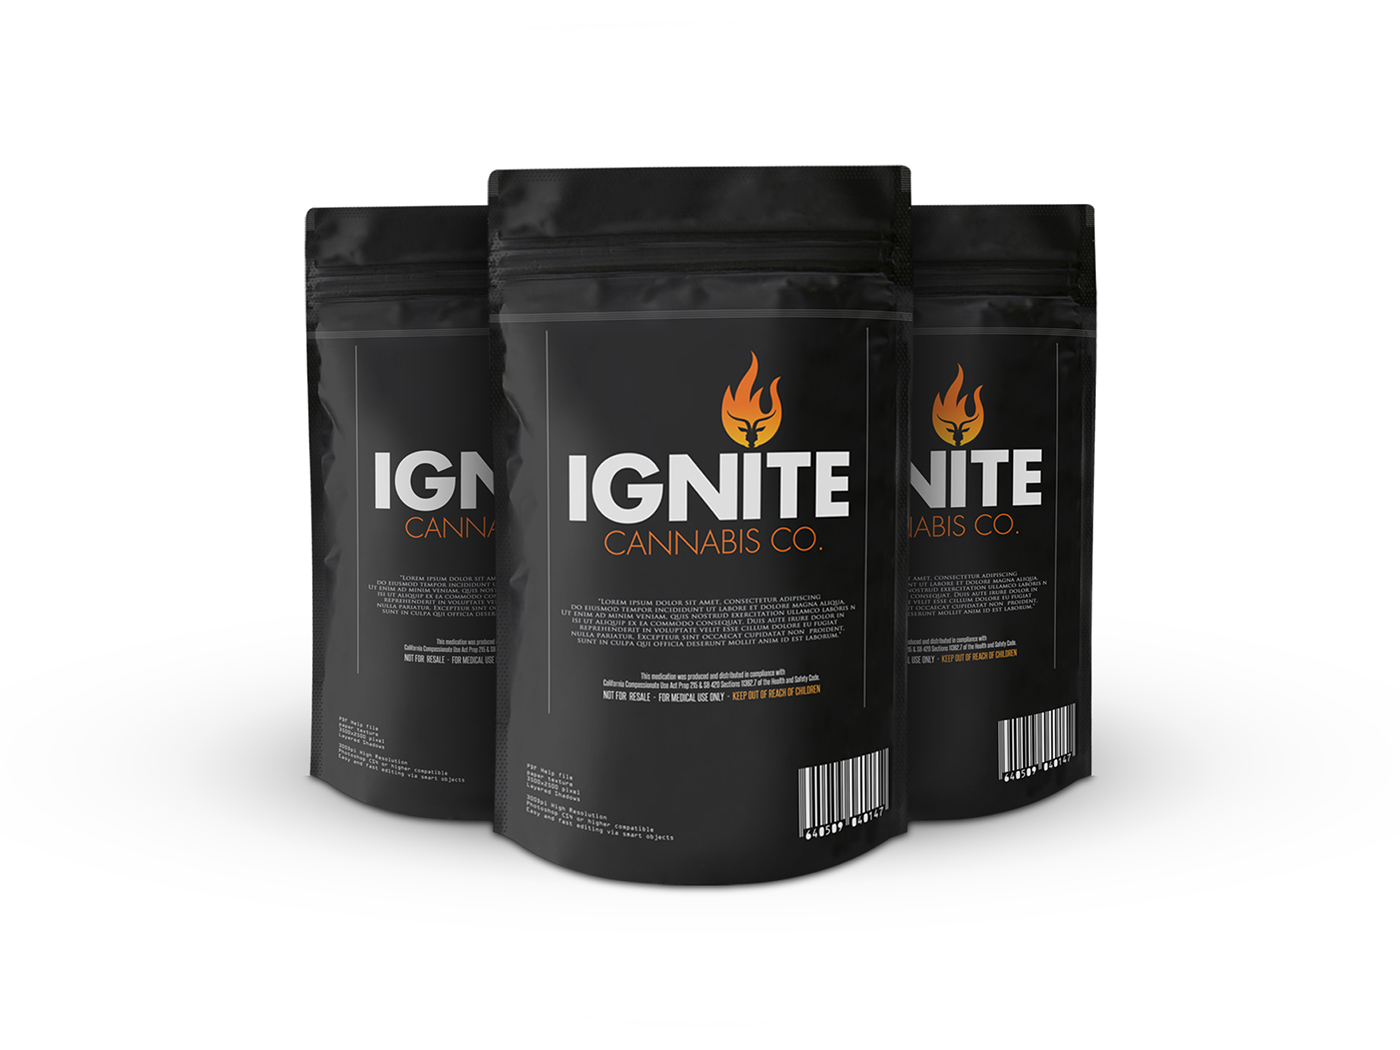 ignite cannabis industry branding  Packaging Startup Illustrator brand development business